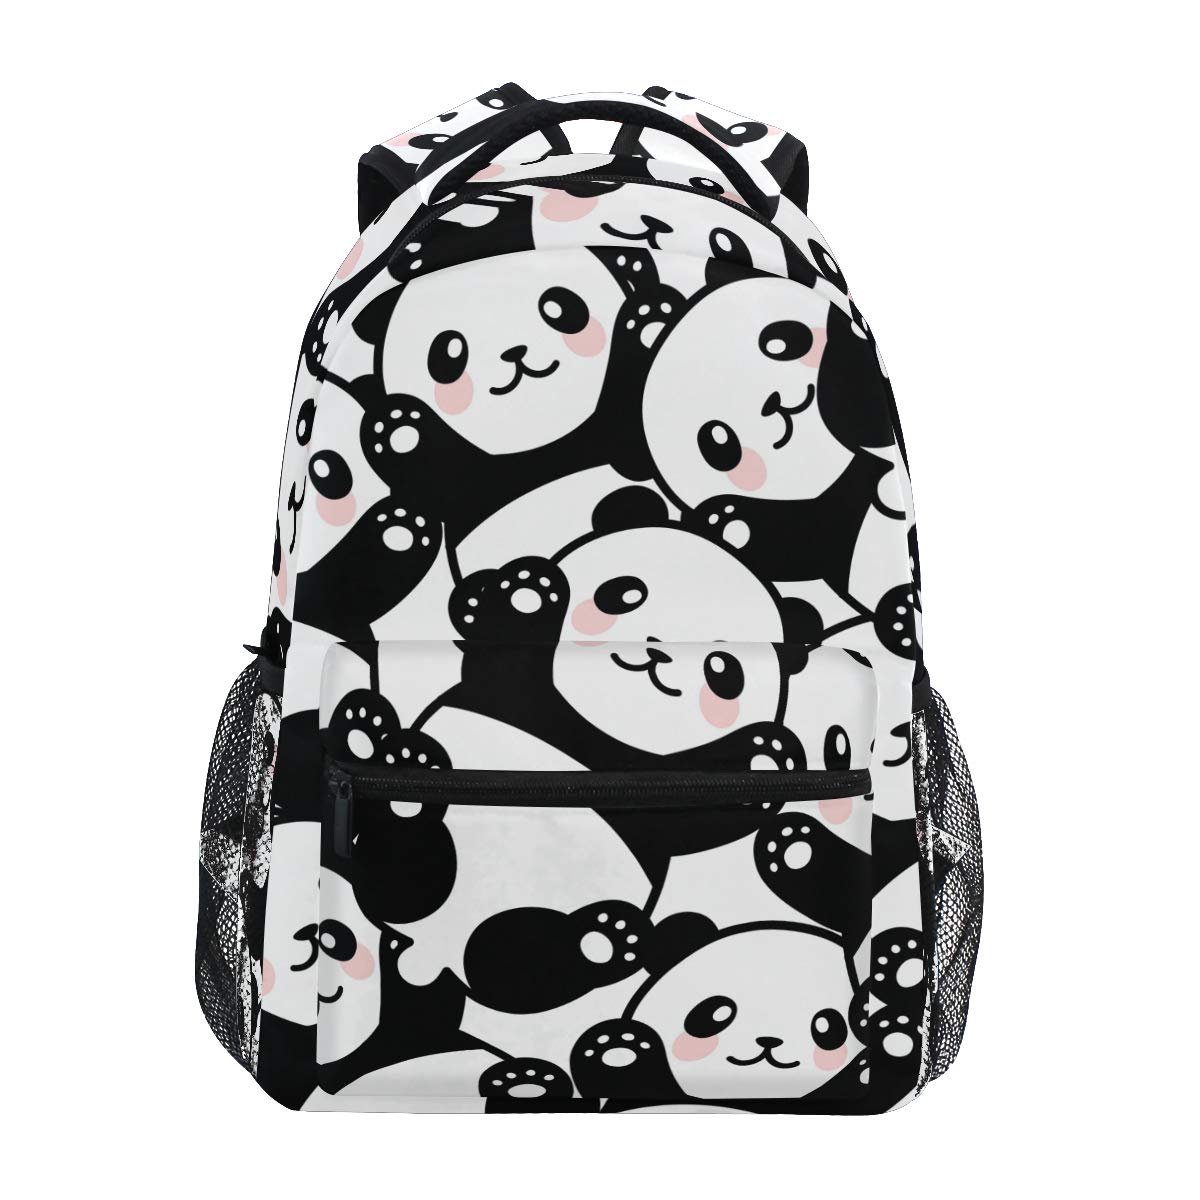 JUMBEAR Panda Travel Backpack Laptop Middle School Students Canvas Kids Bookbag Lightweight Fashion Business Waterproof Shoulder Daypack for Womens Mens Boys Girls